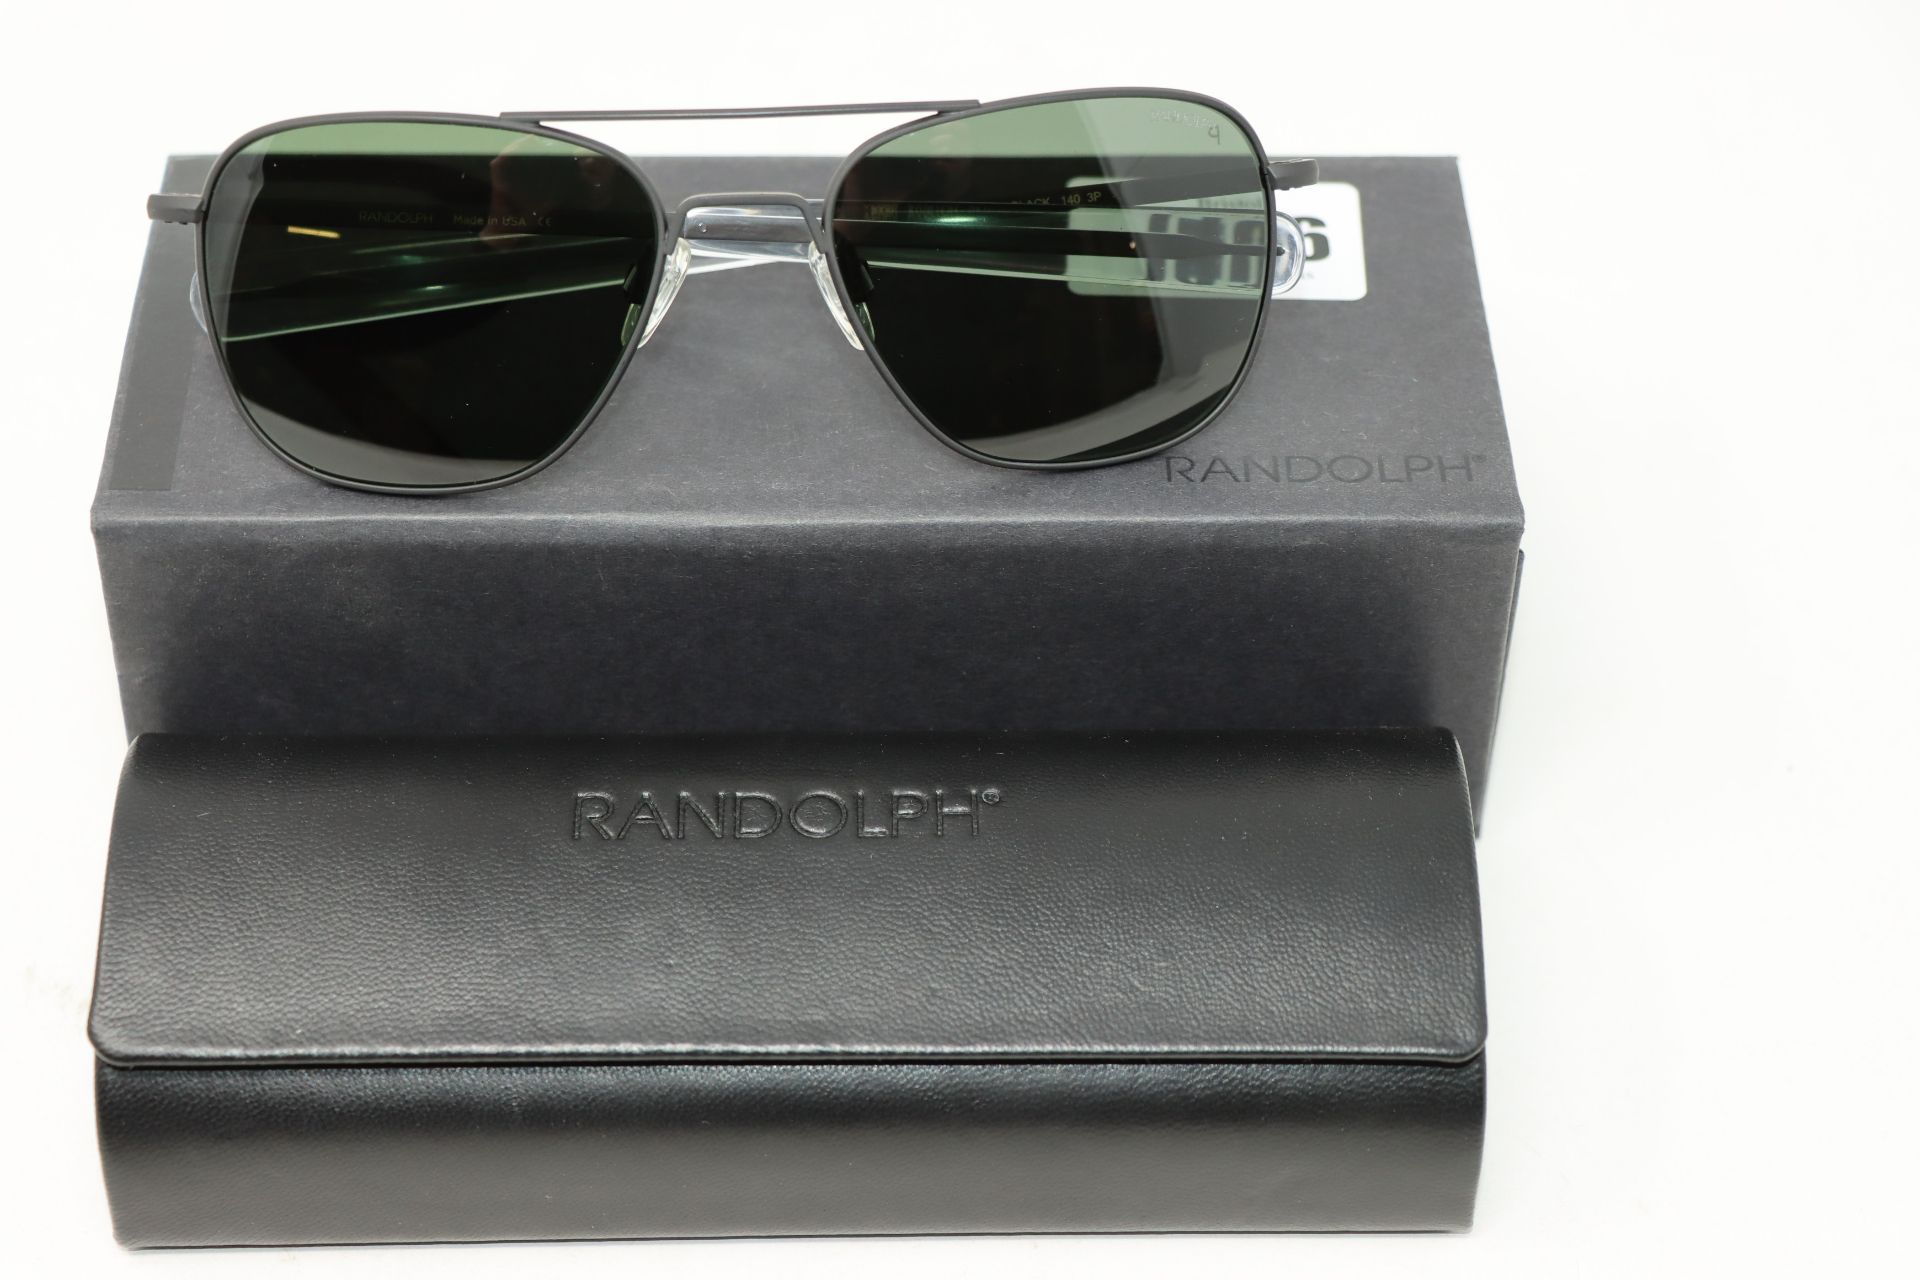 A pair of as new Randolph Aviator sunglasses.